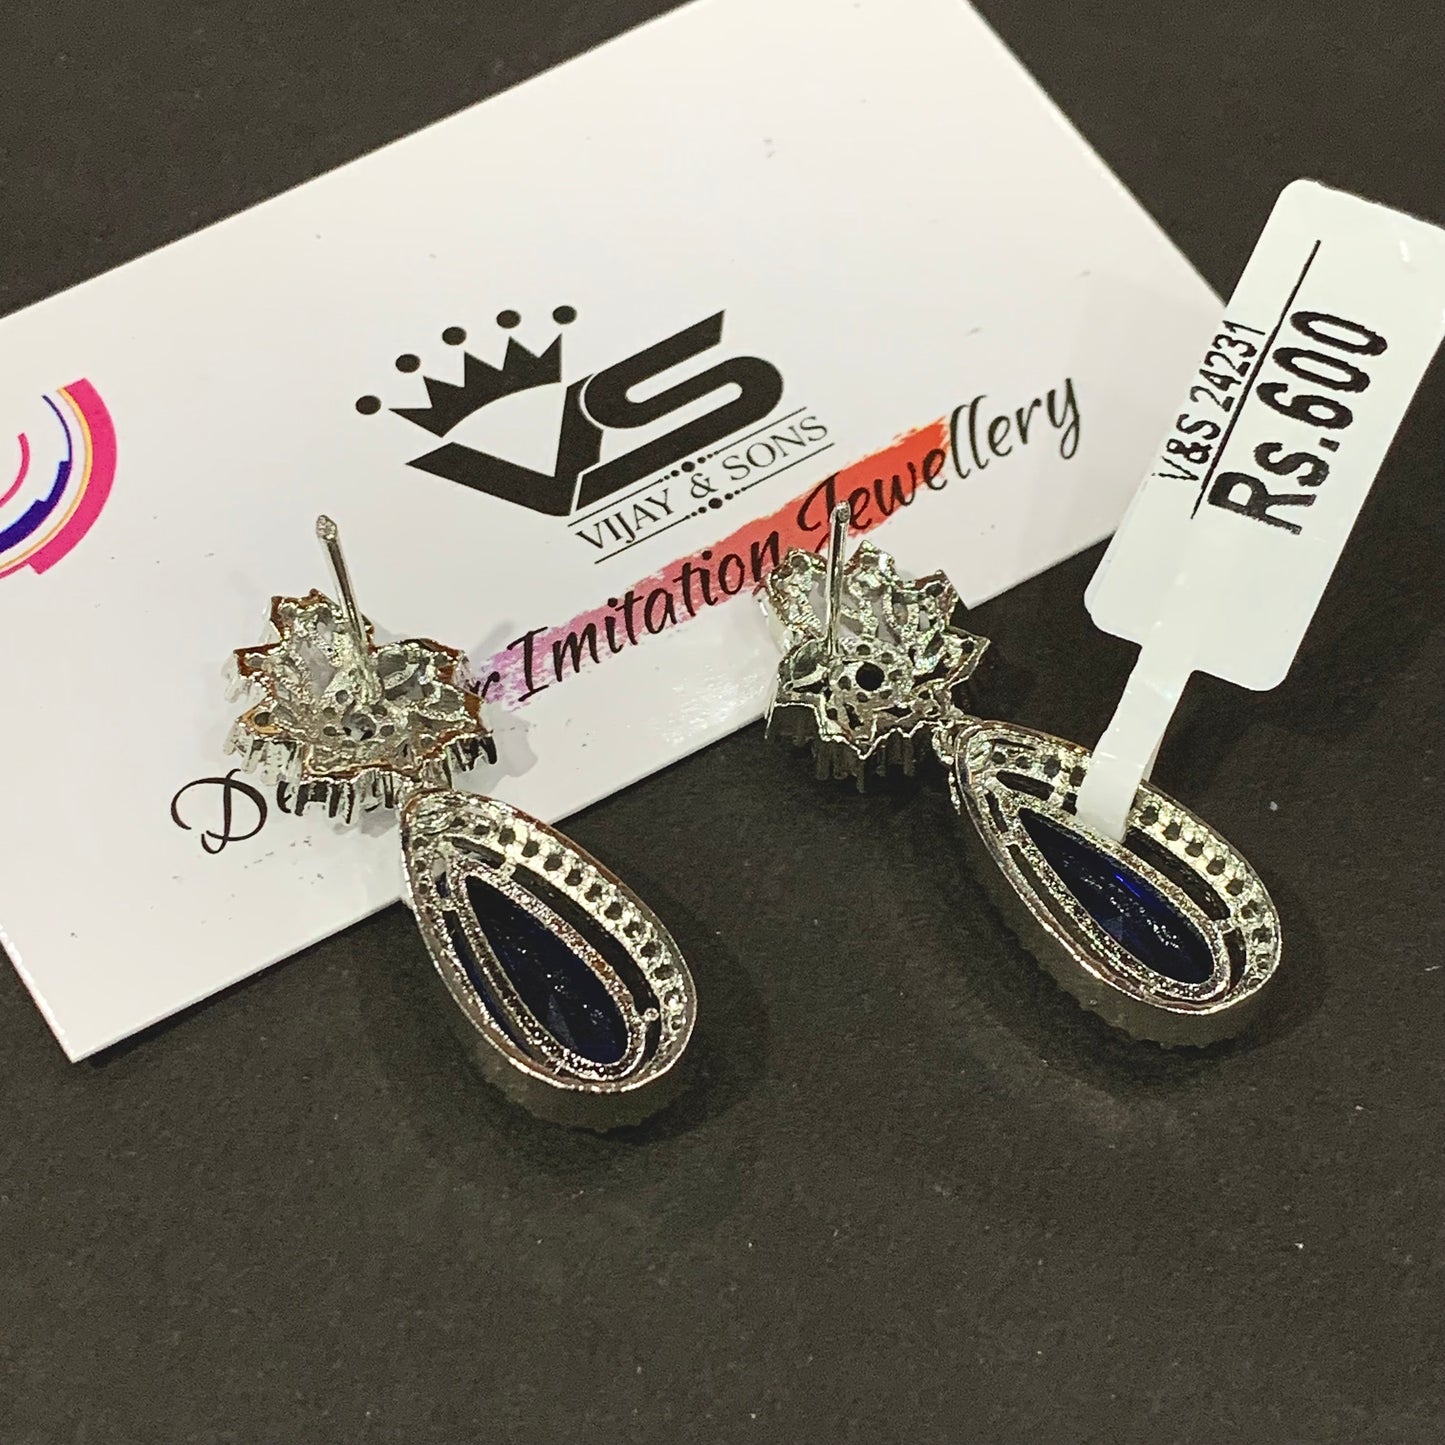 American diamond earrings 245256